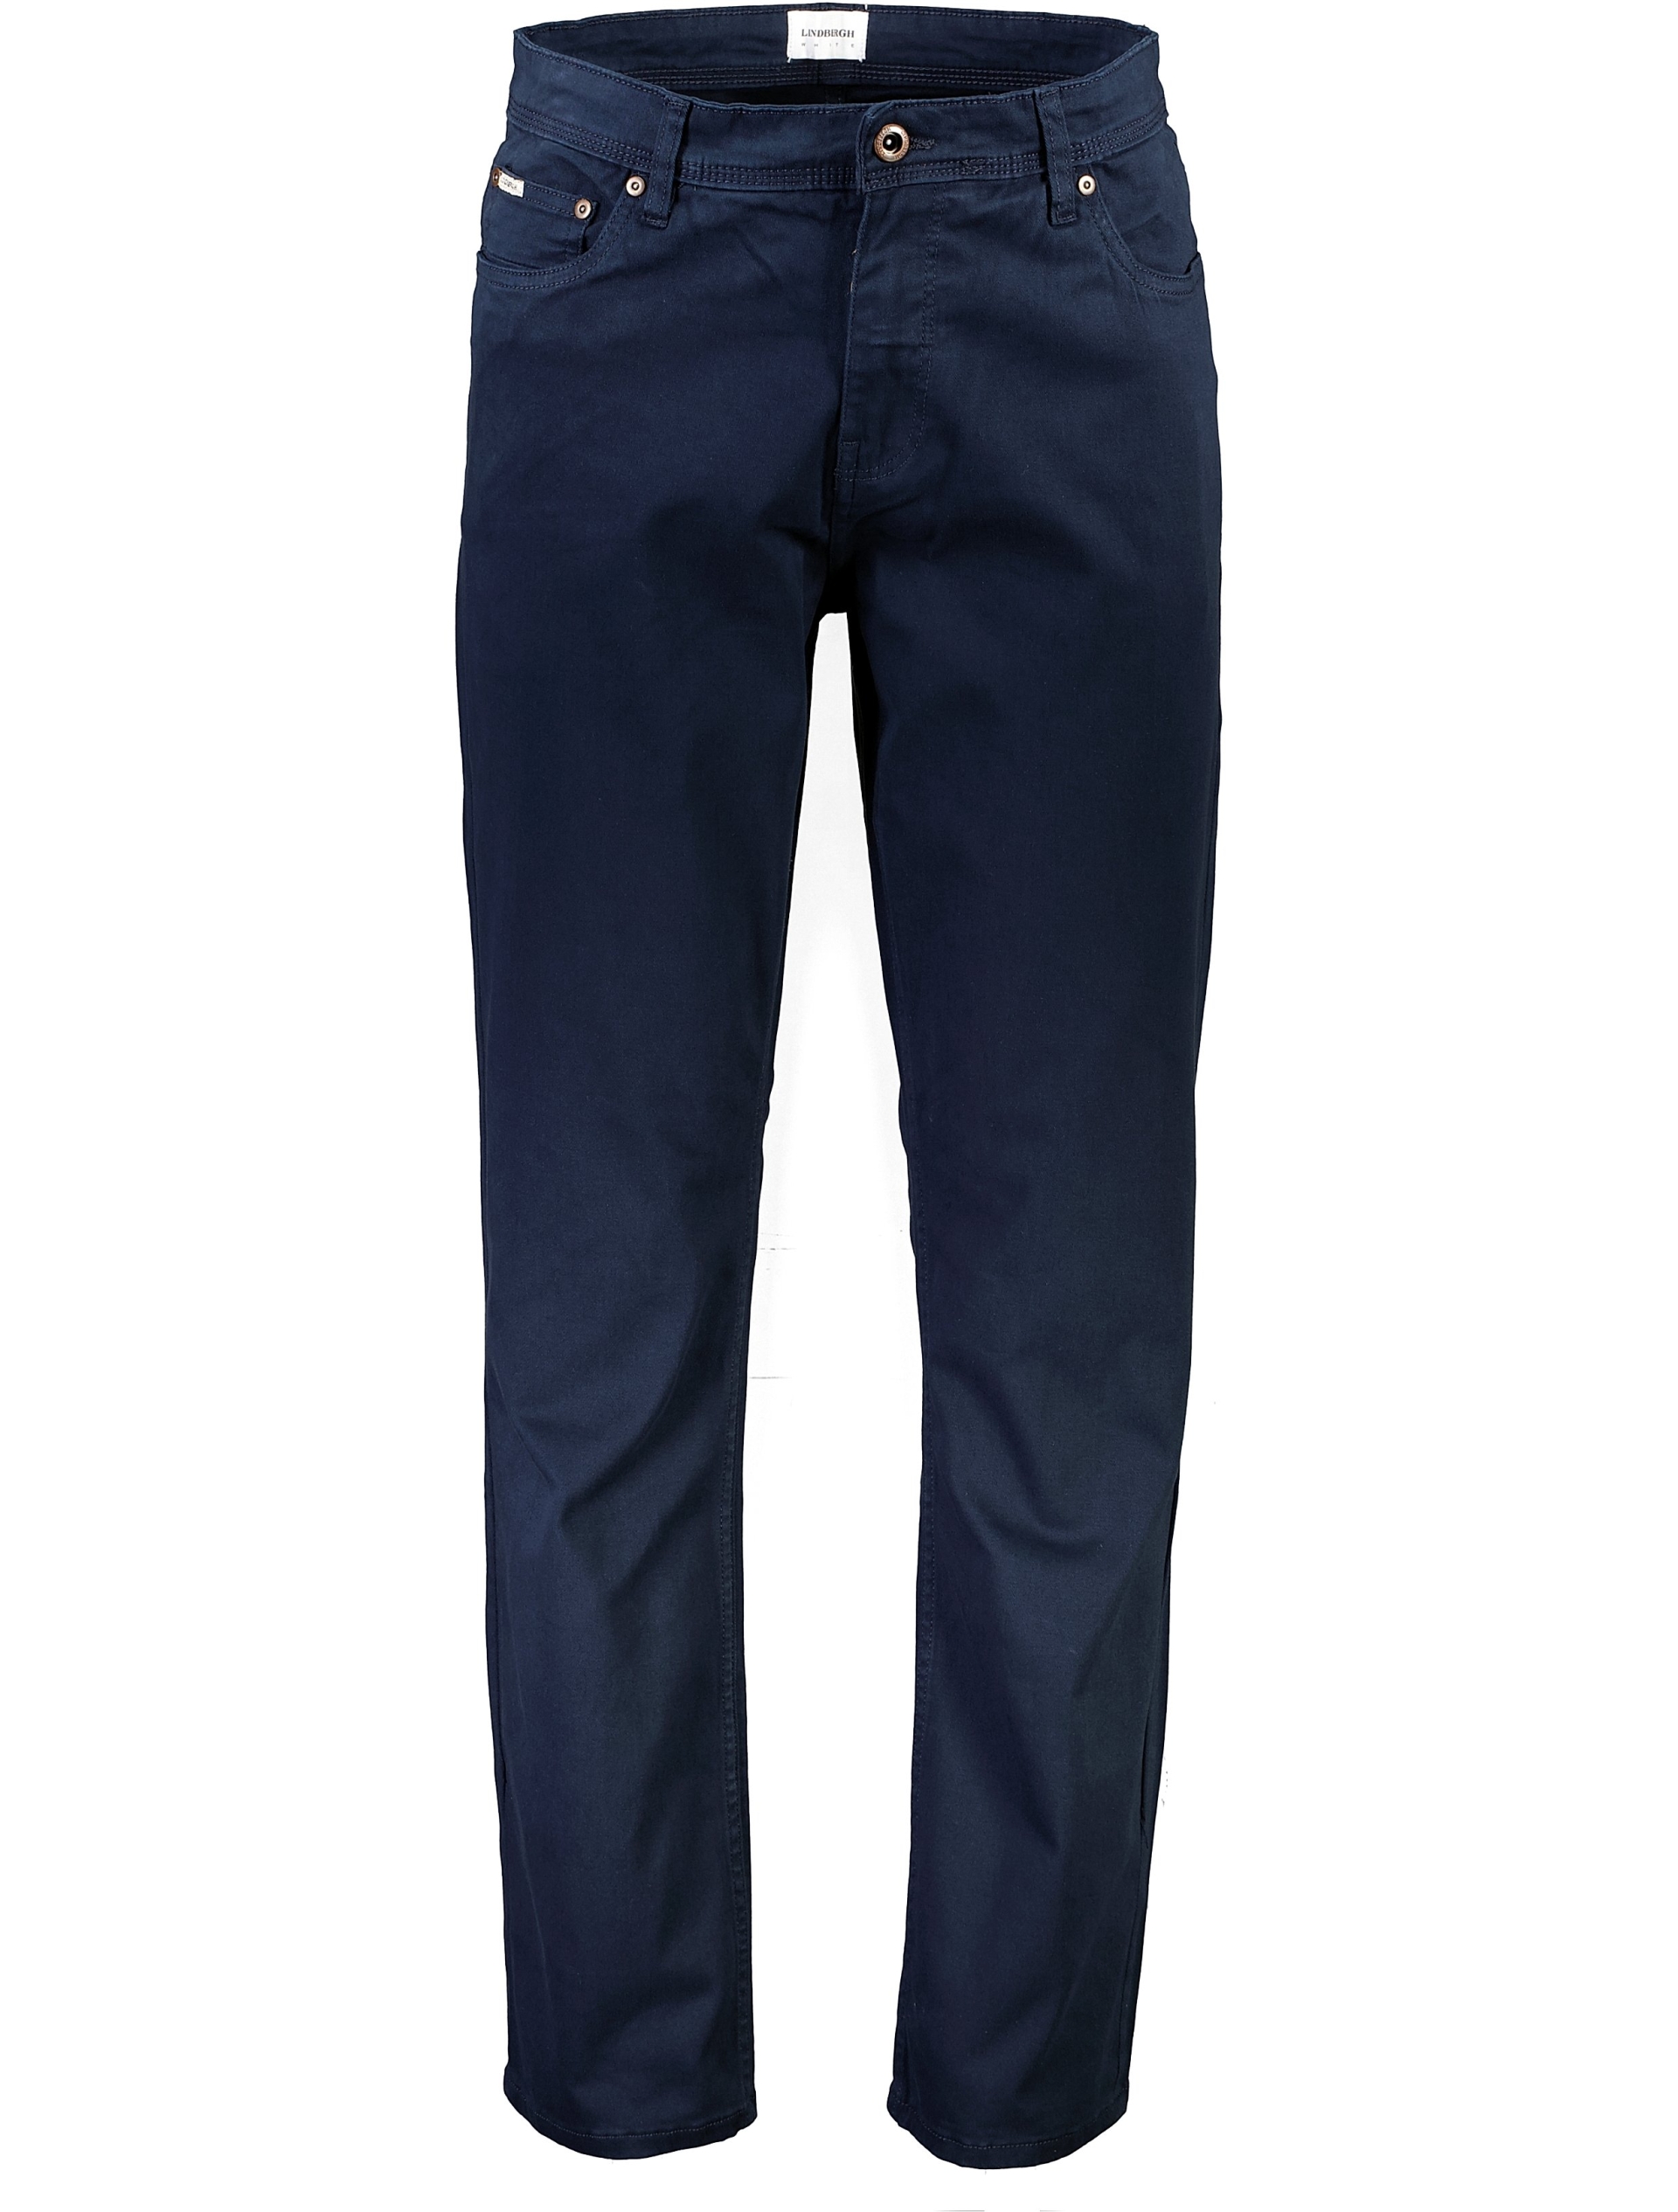 Lindbergh 5-Pocket Jeans blau / dk navy